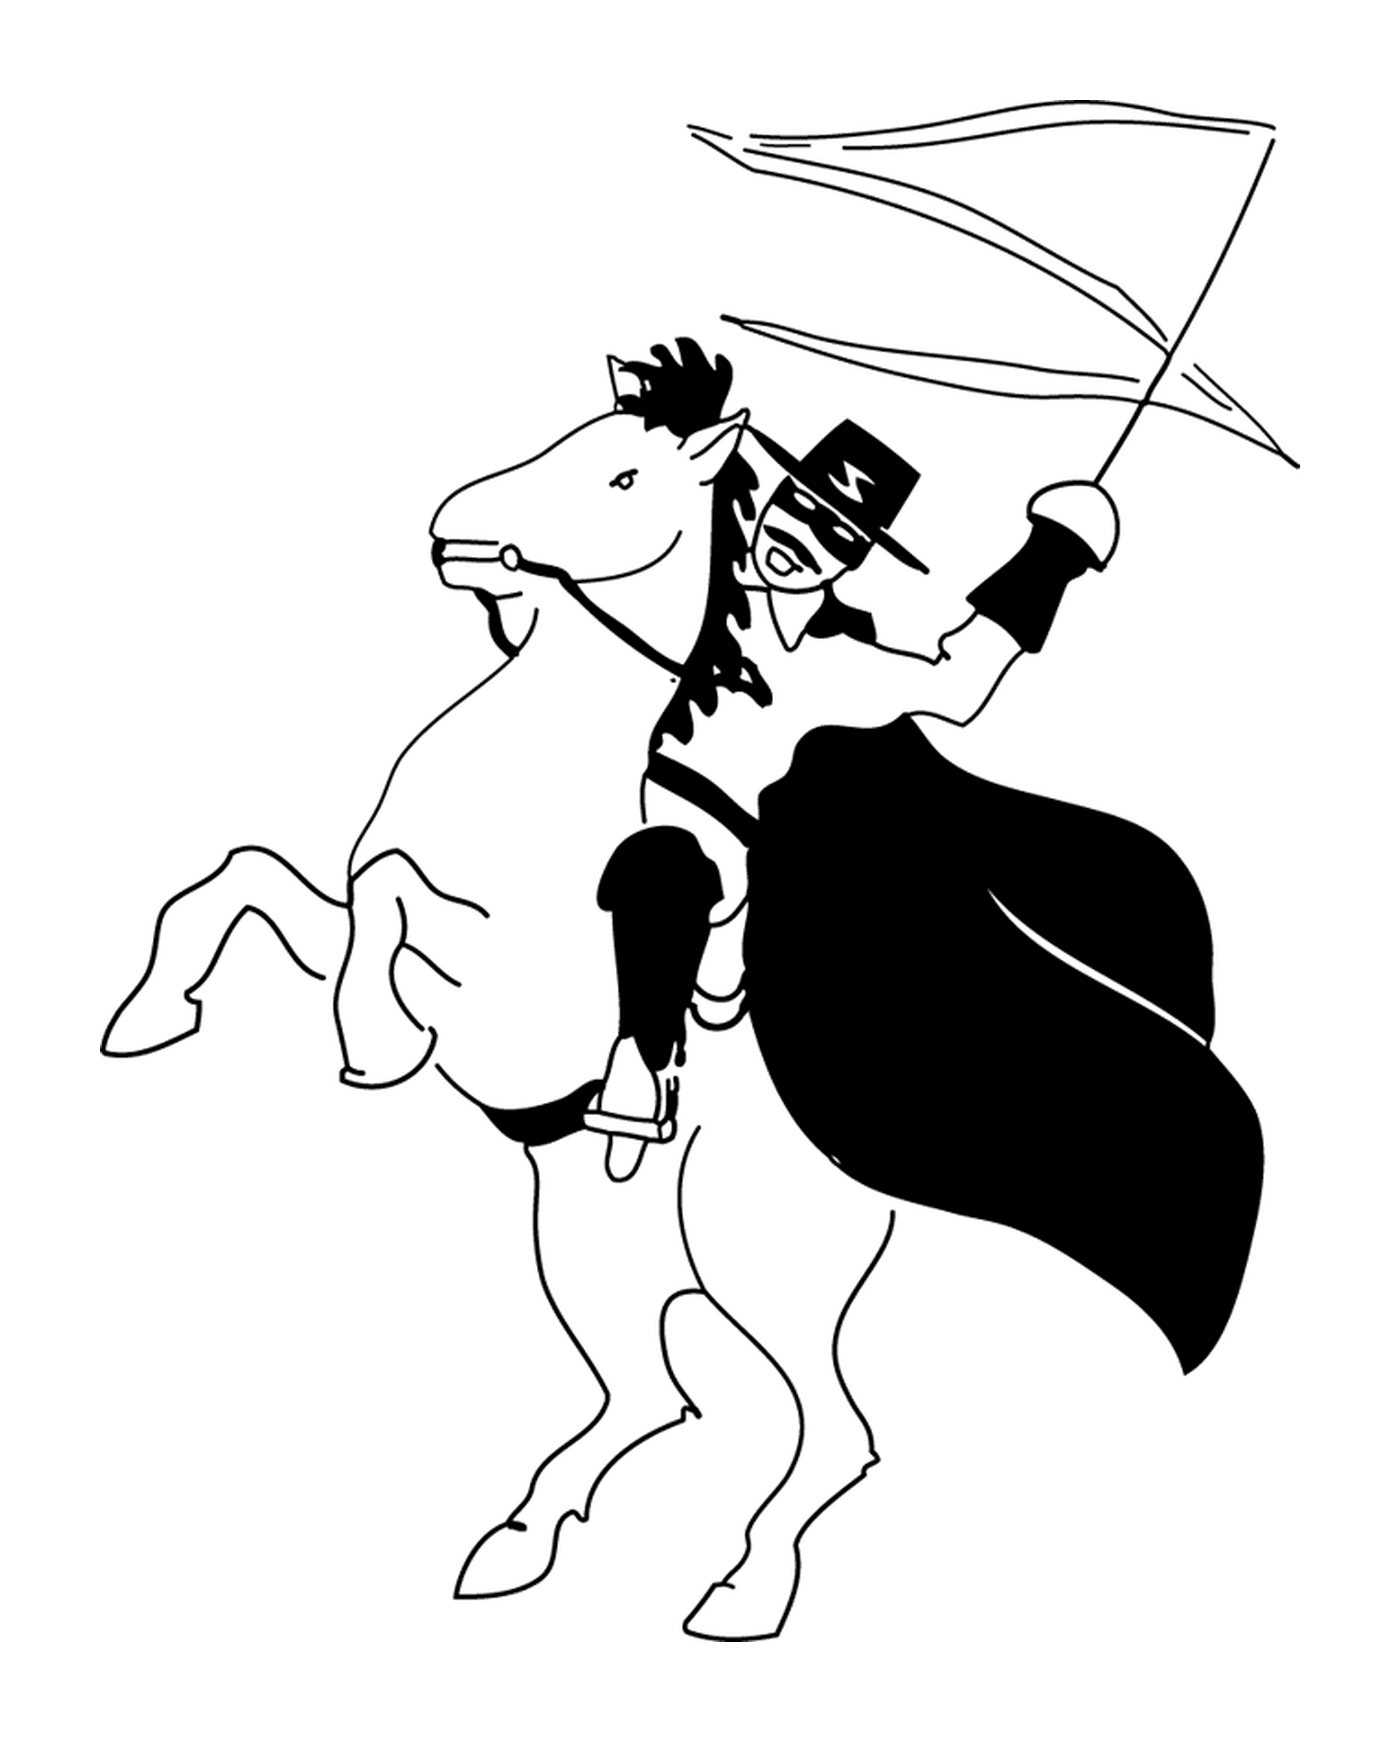  Zorro en su caballo Tornado 